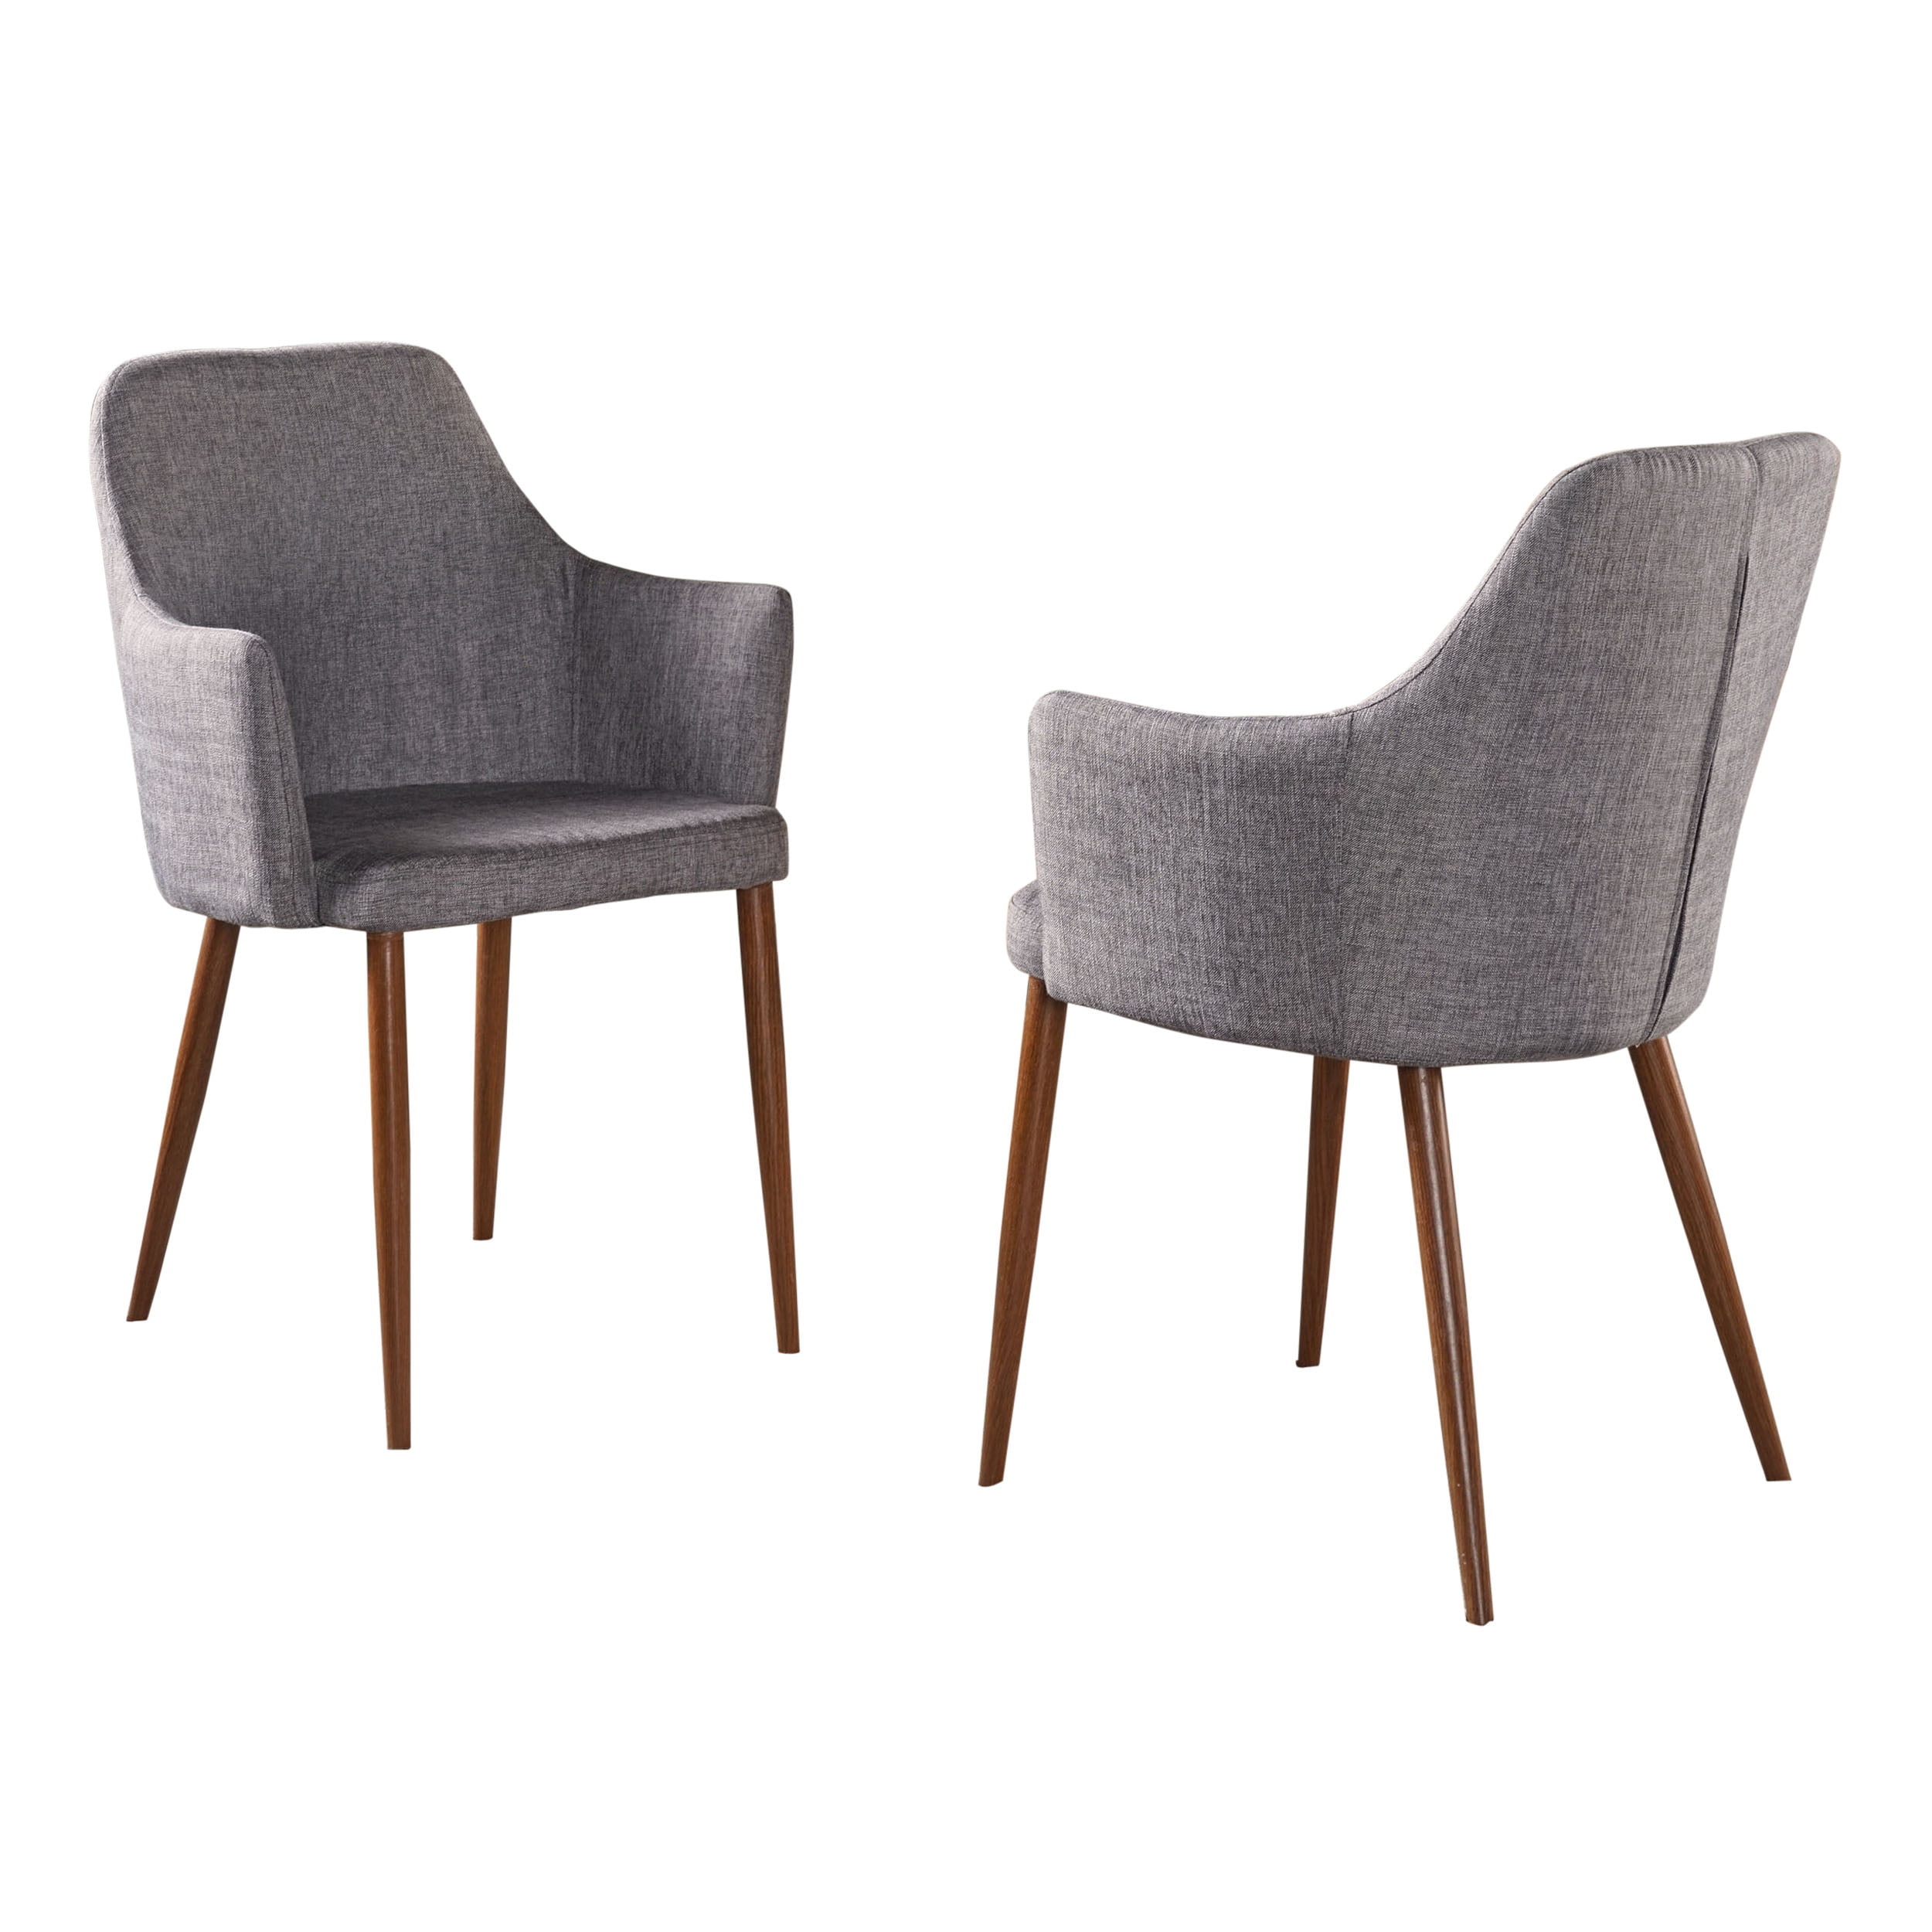 Gdf Studio Serra Mid Century Modern, Grey Dining Chairs Wood Legs